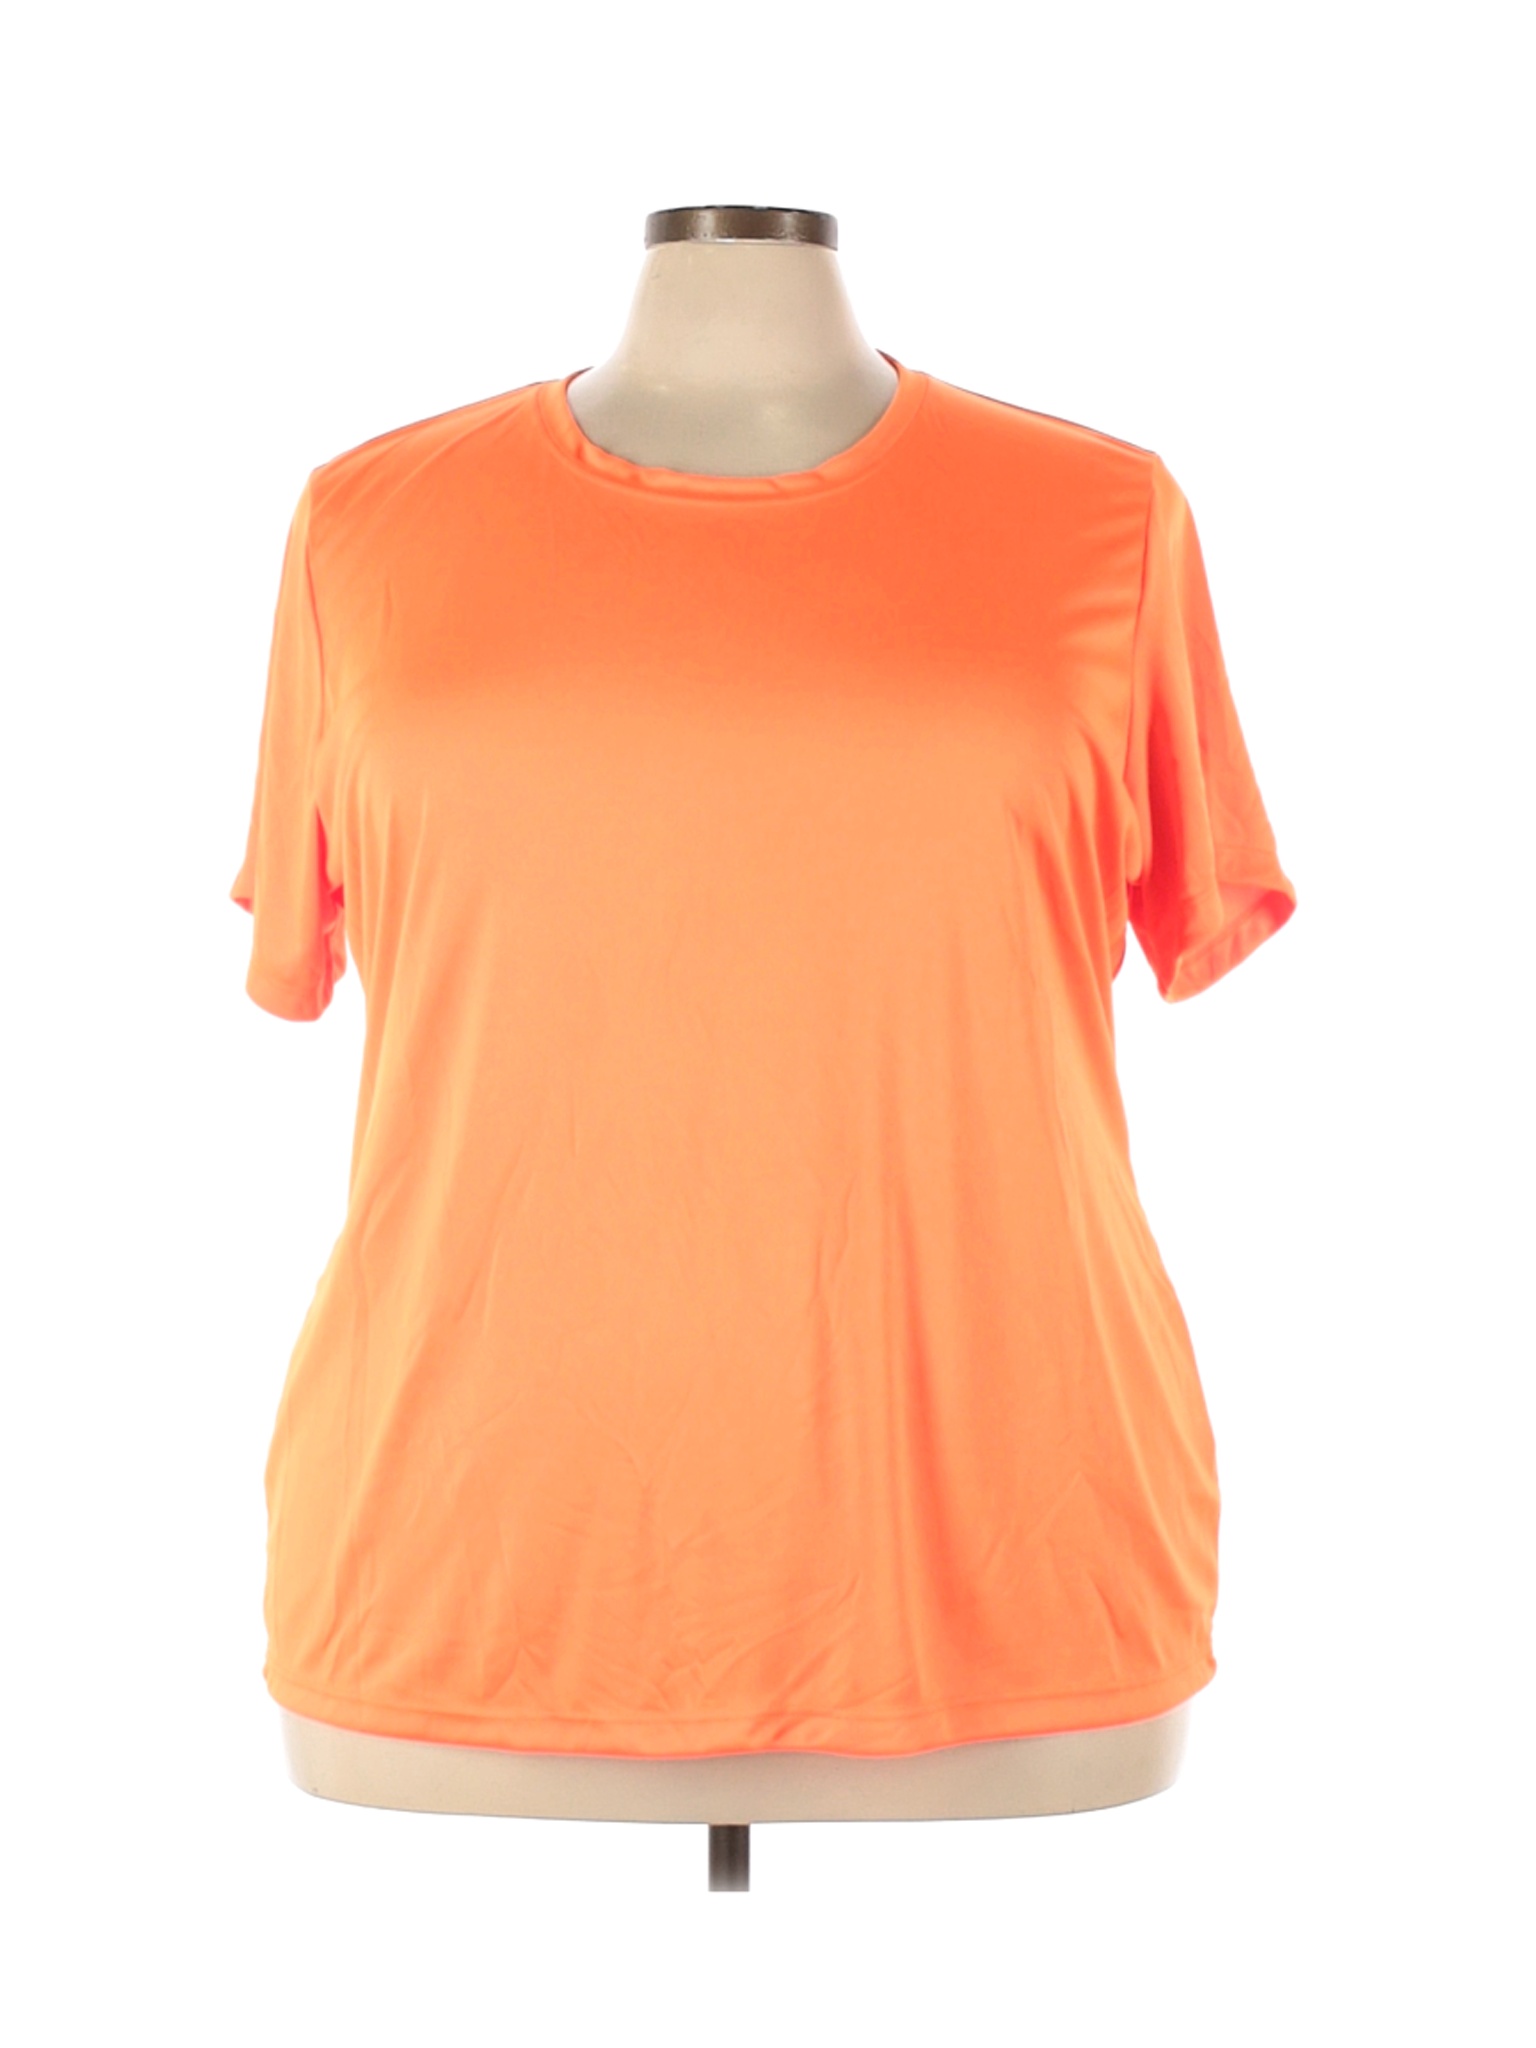 Joes USA Women Orange Active T-Shirt 4X Plus | eBay